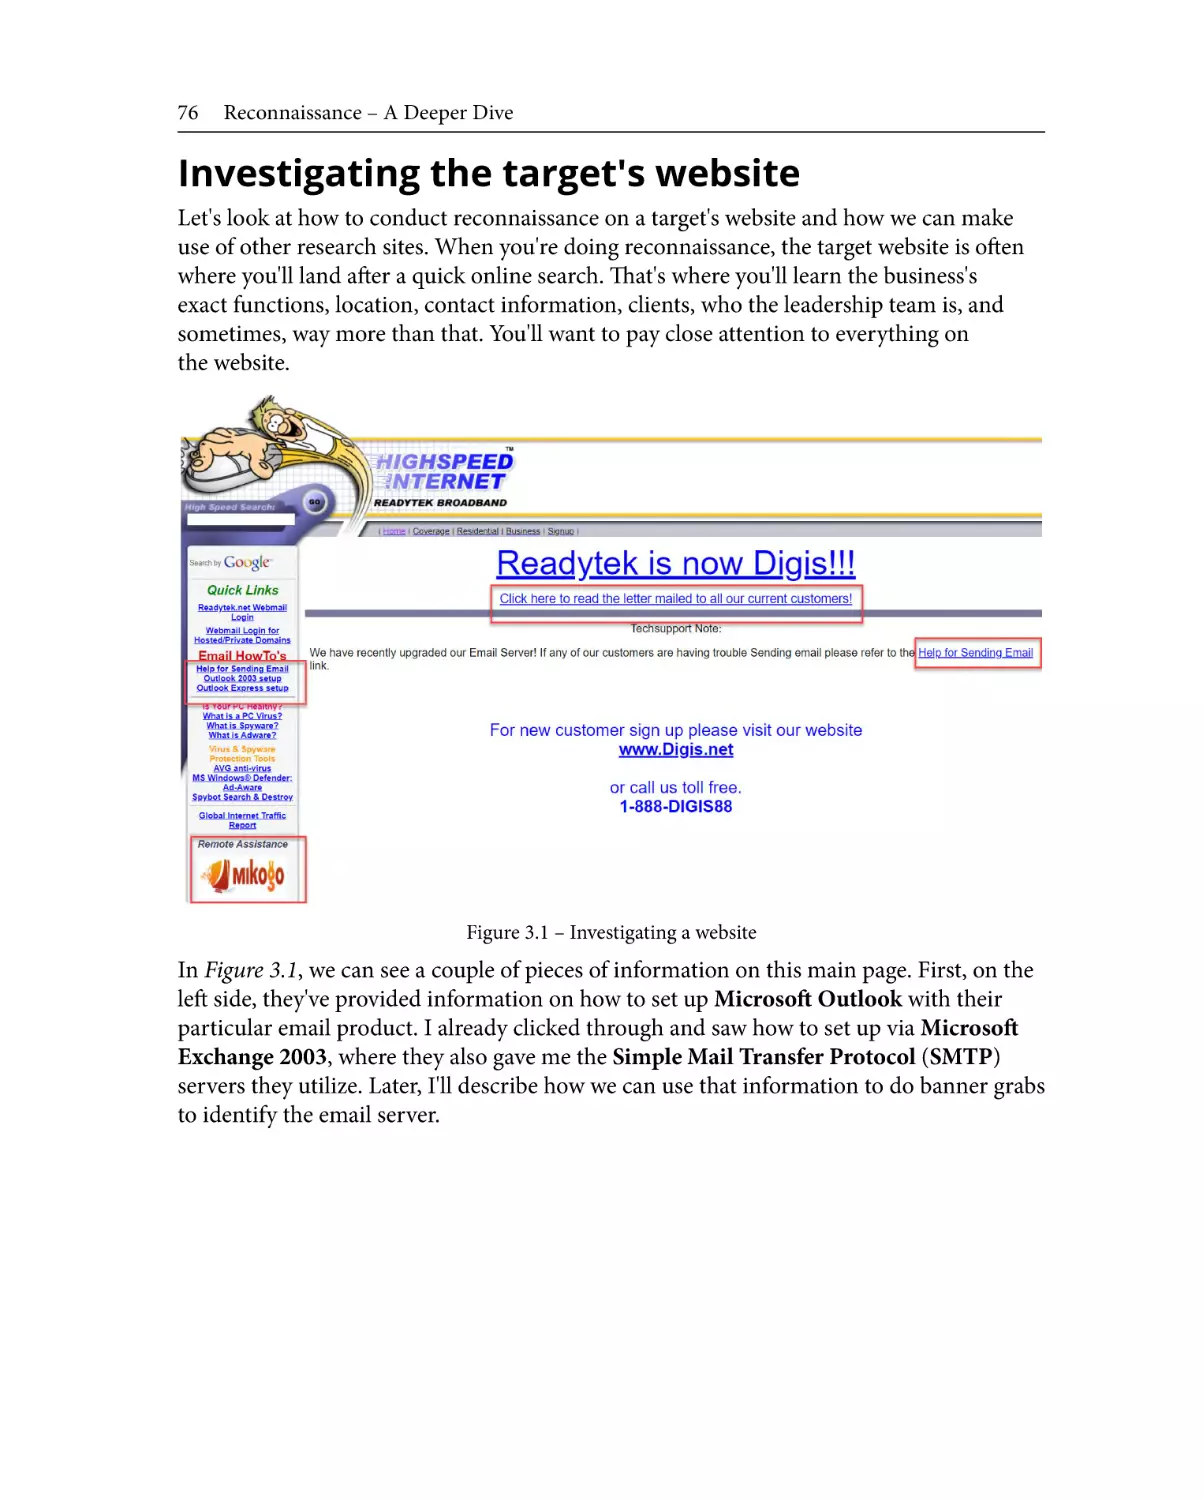 Investigating the target's website